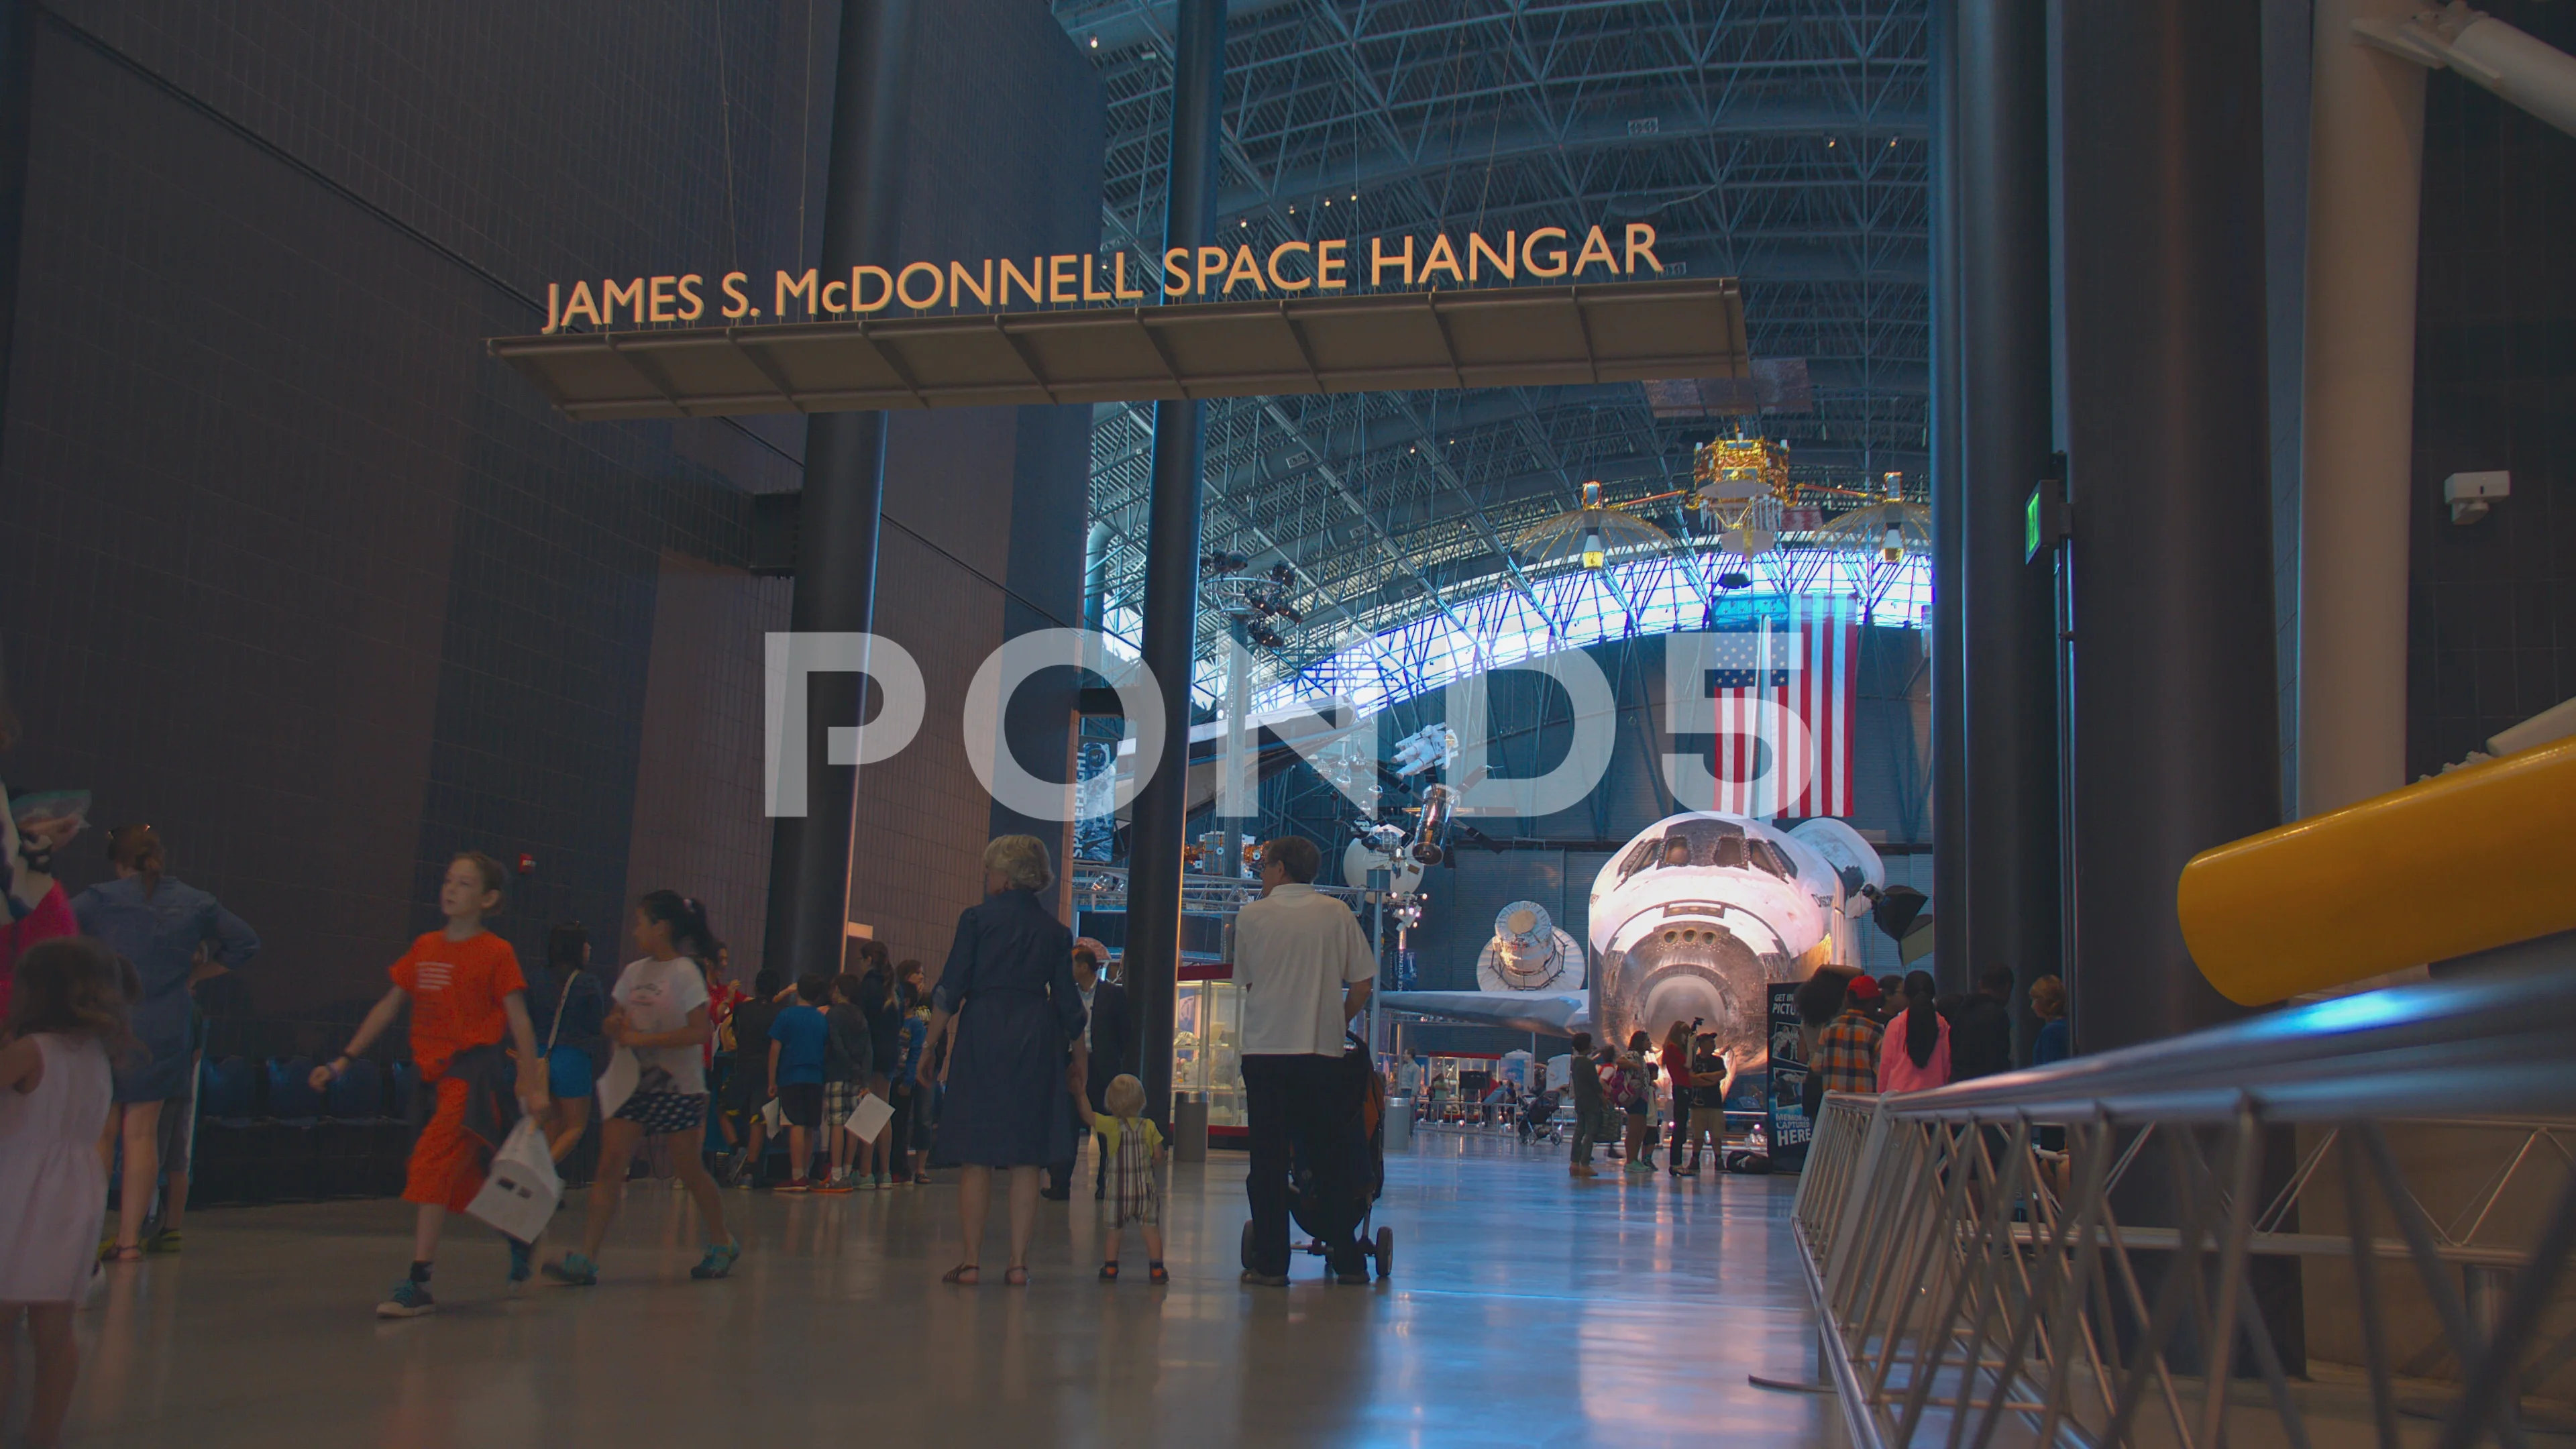 https://images.pond5.com/james-s-mcdonnell-space-hangar-077650127_prevstill.jpeg